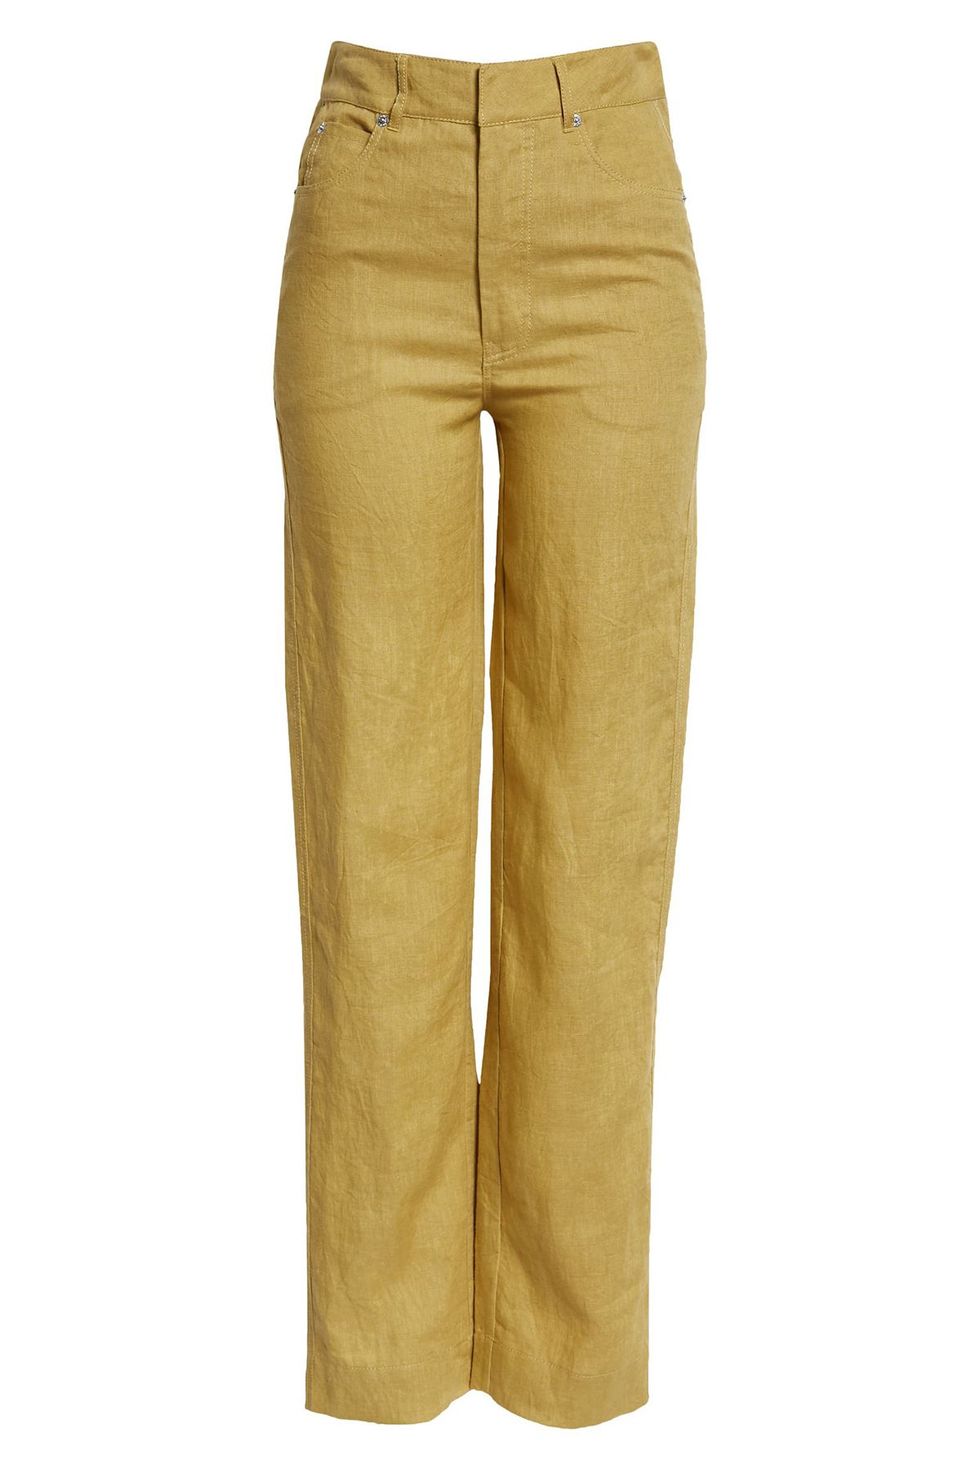 15 Best Linen Pants for Women 2023 - Stylish Linen Trousers for Spring ...